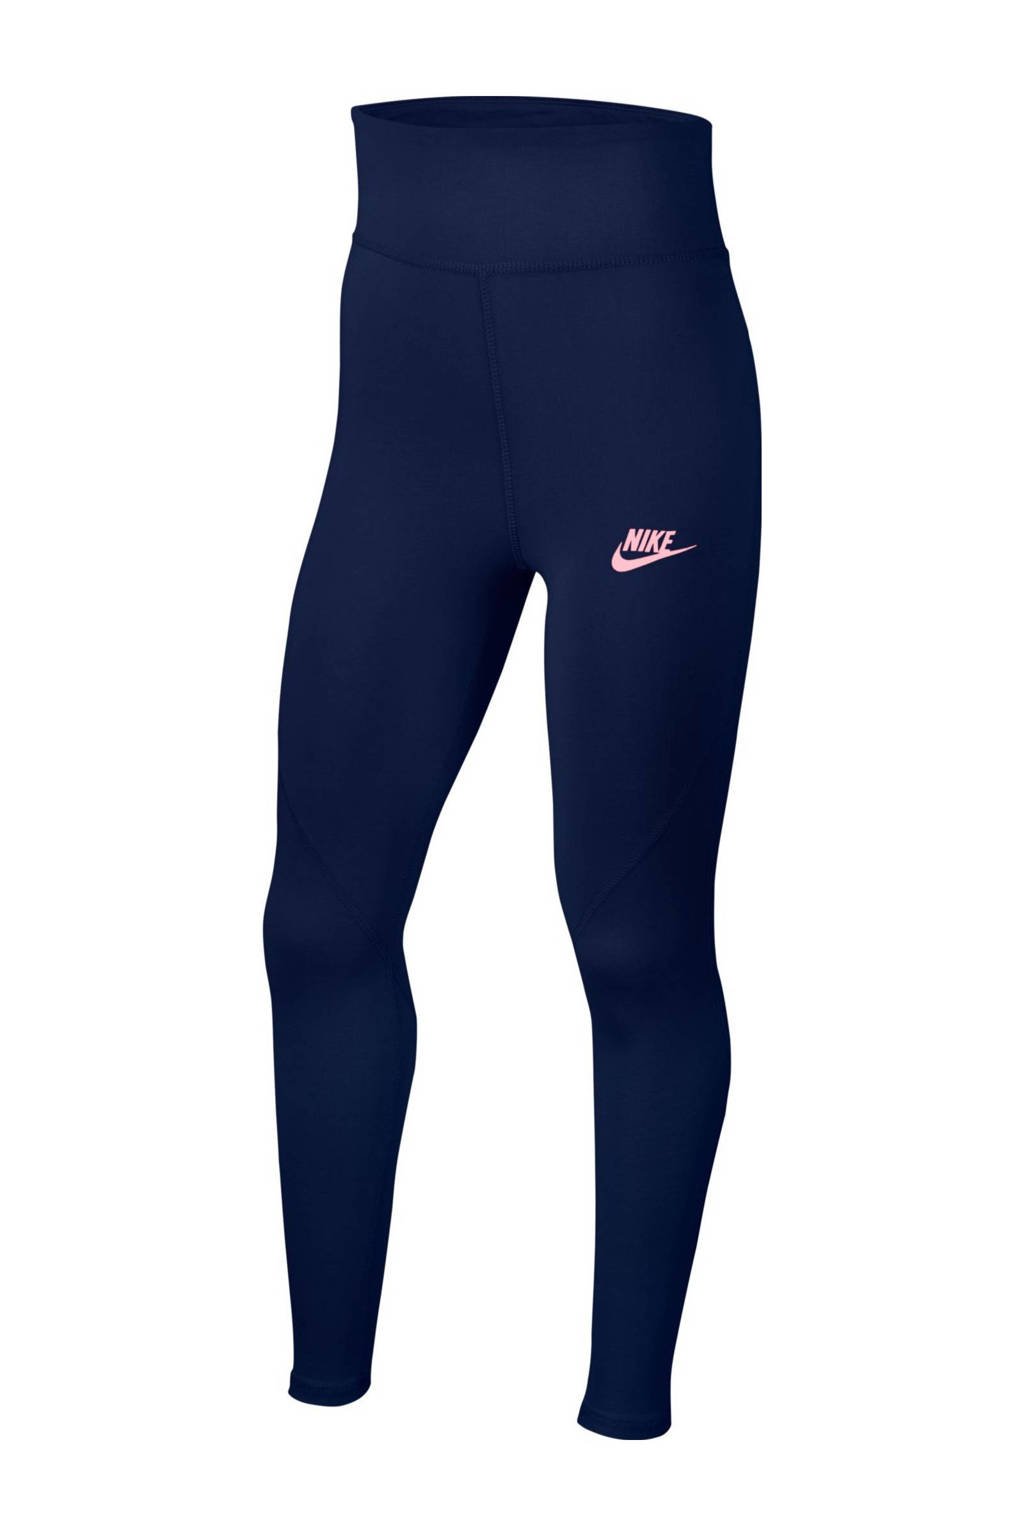 Nike legging donkerblauw, Donkerblauw